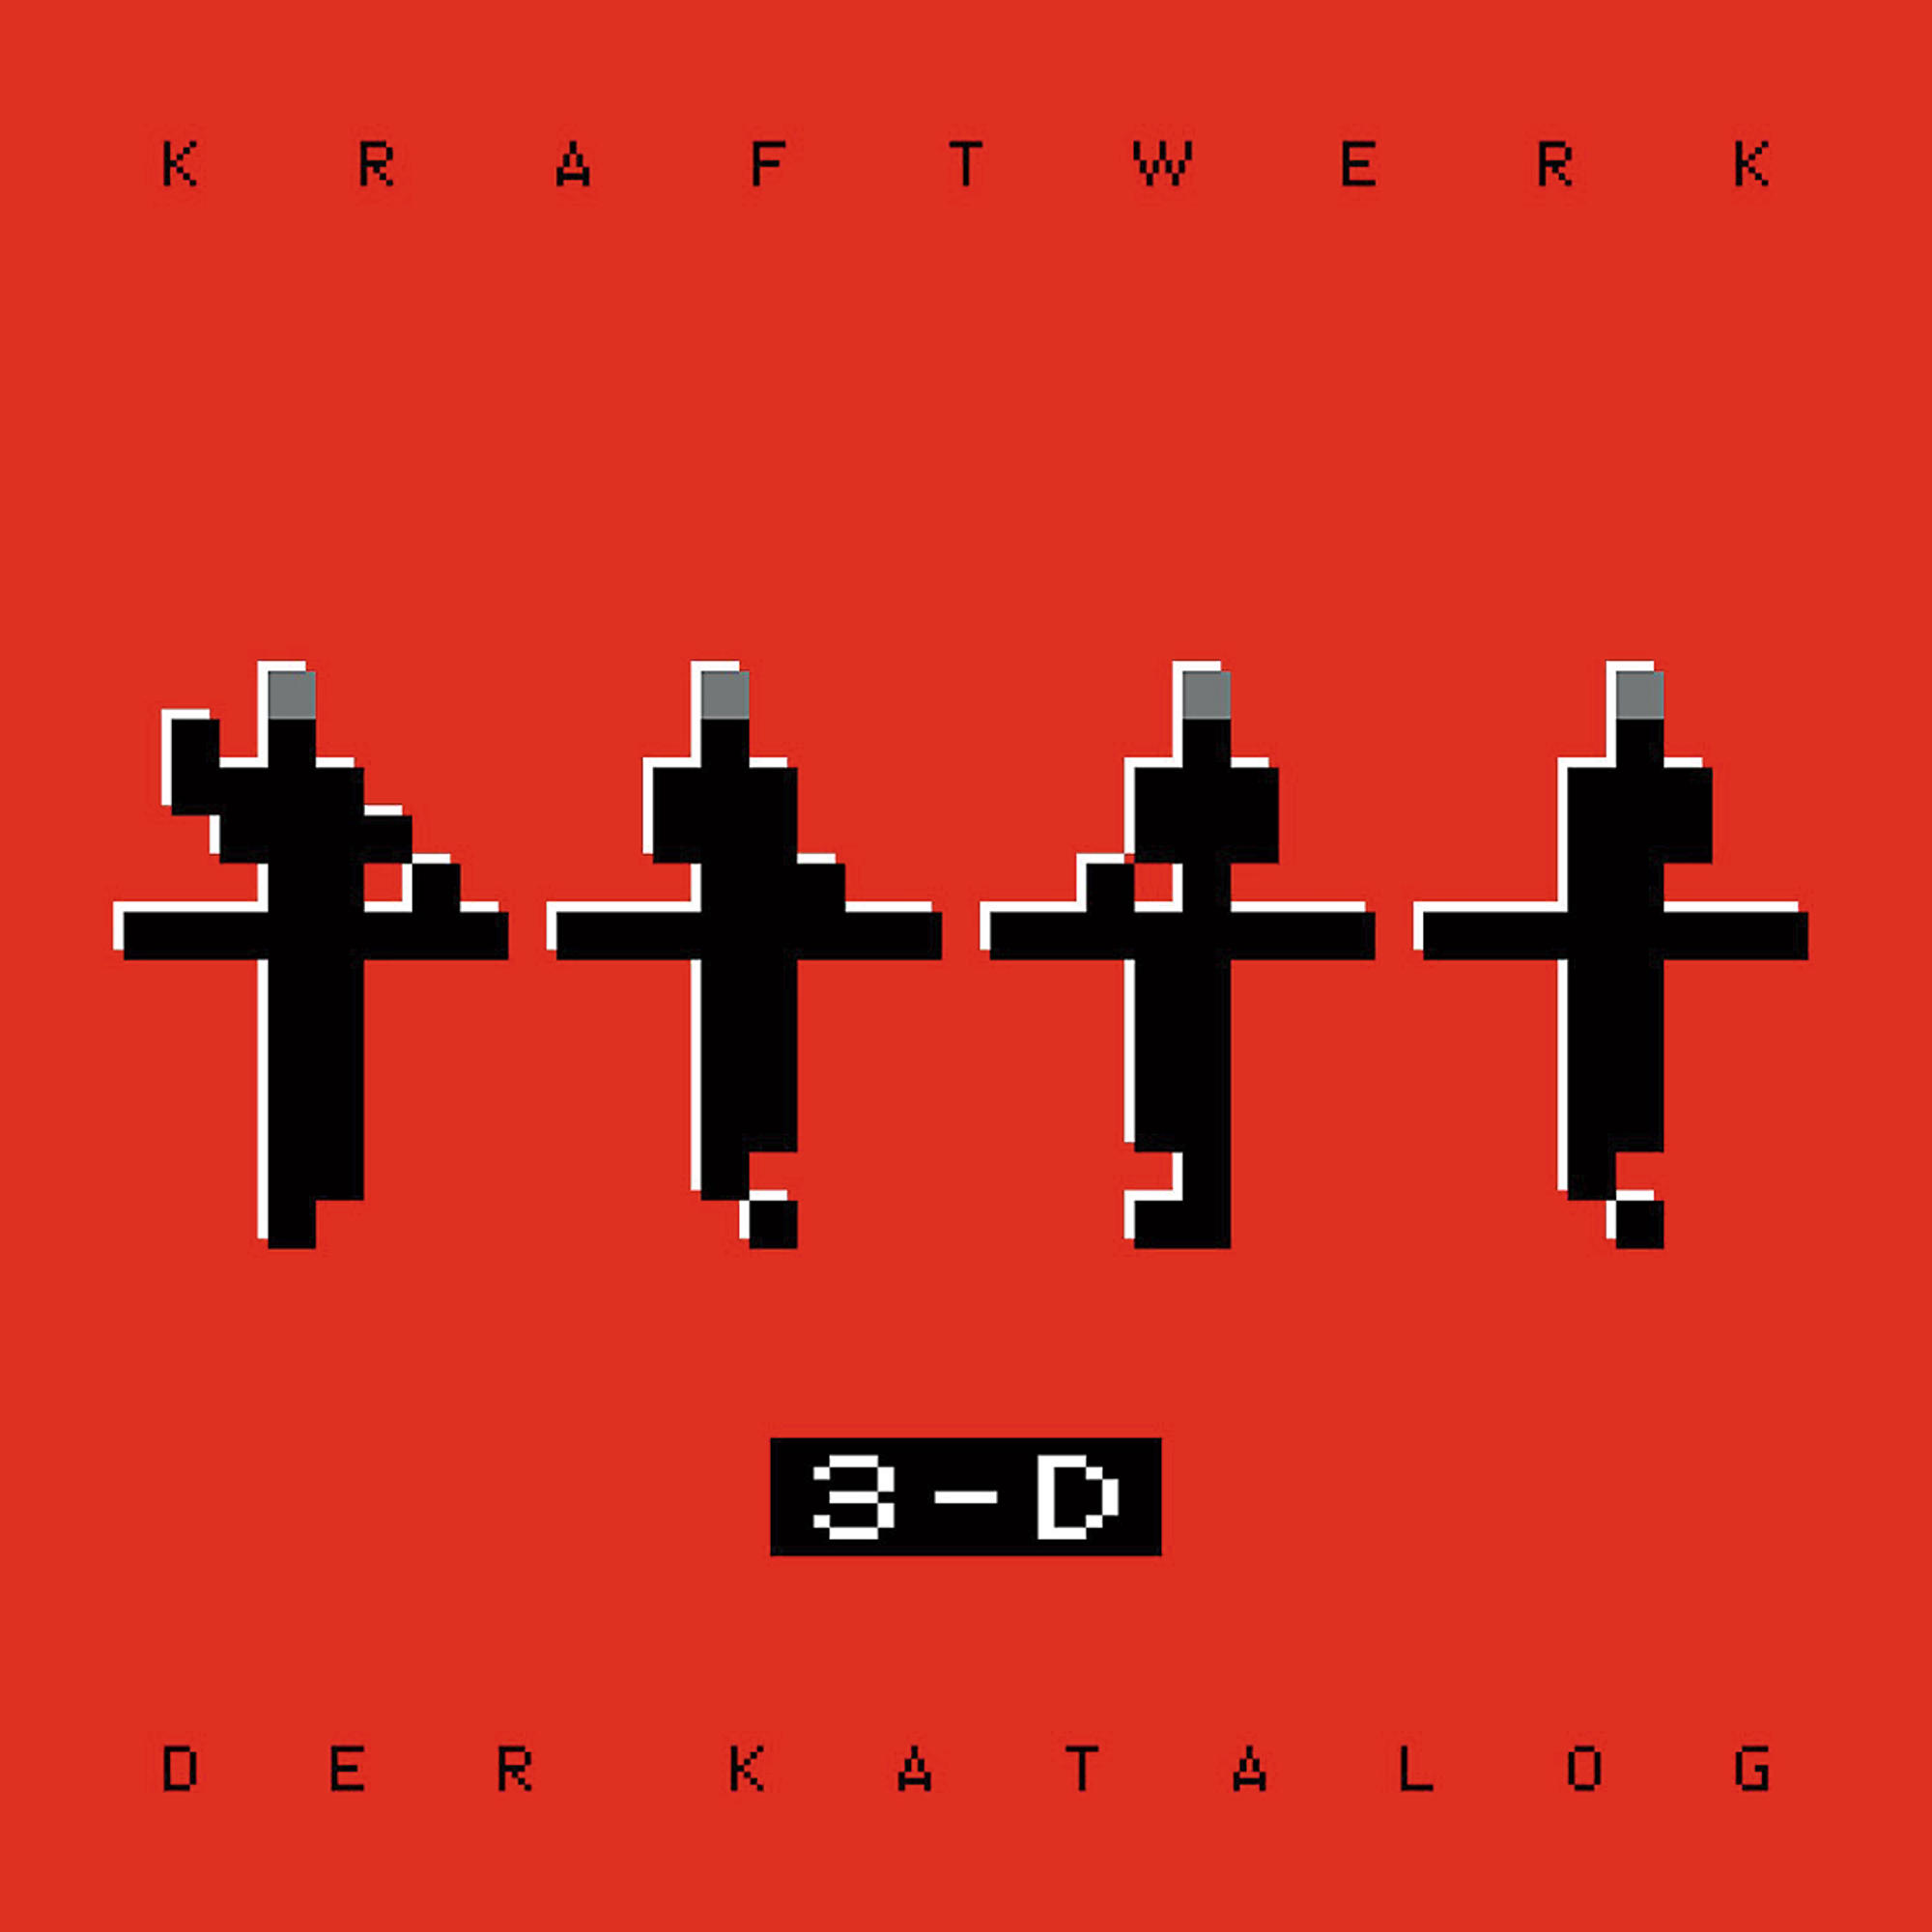 Kraftwerk Box - Language) Katalog 3-D Set-German (Deluxe (CD) - Der